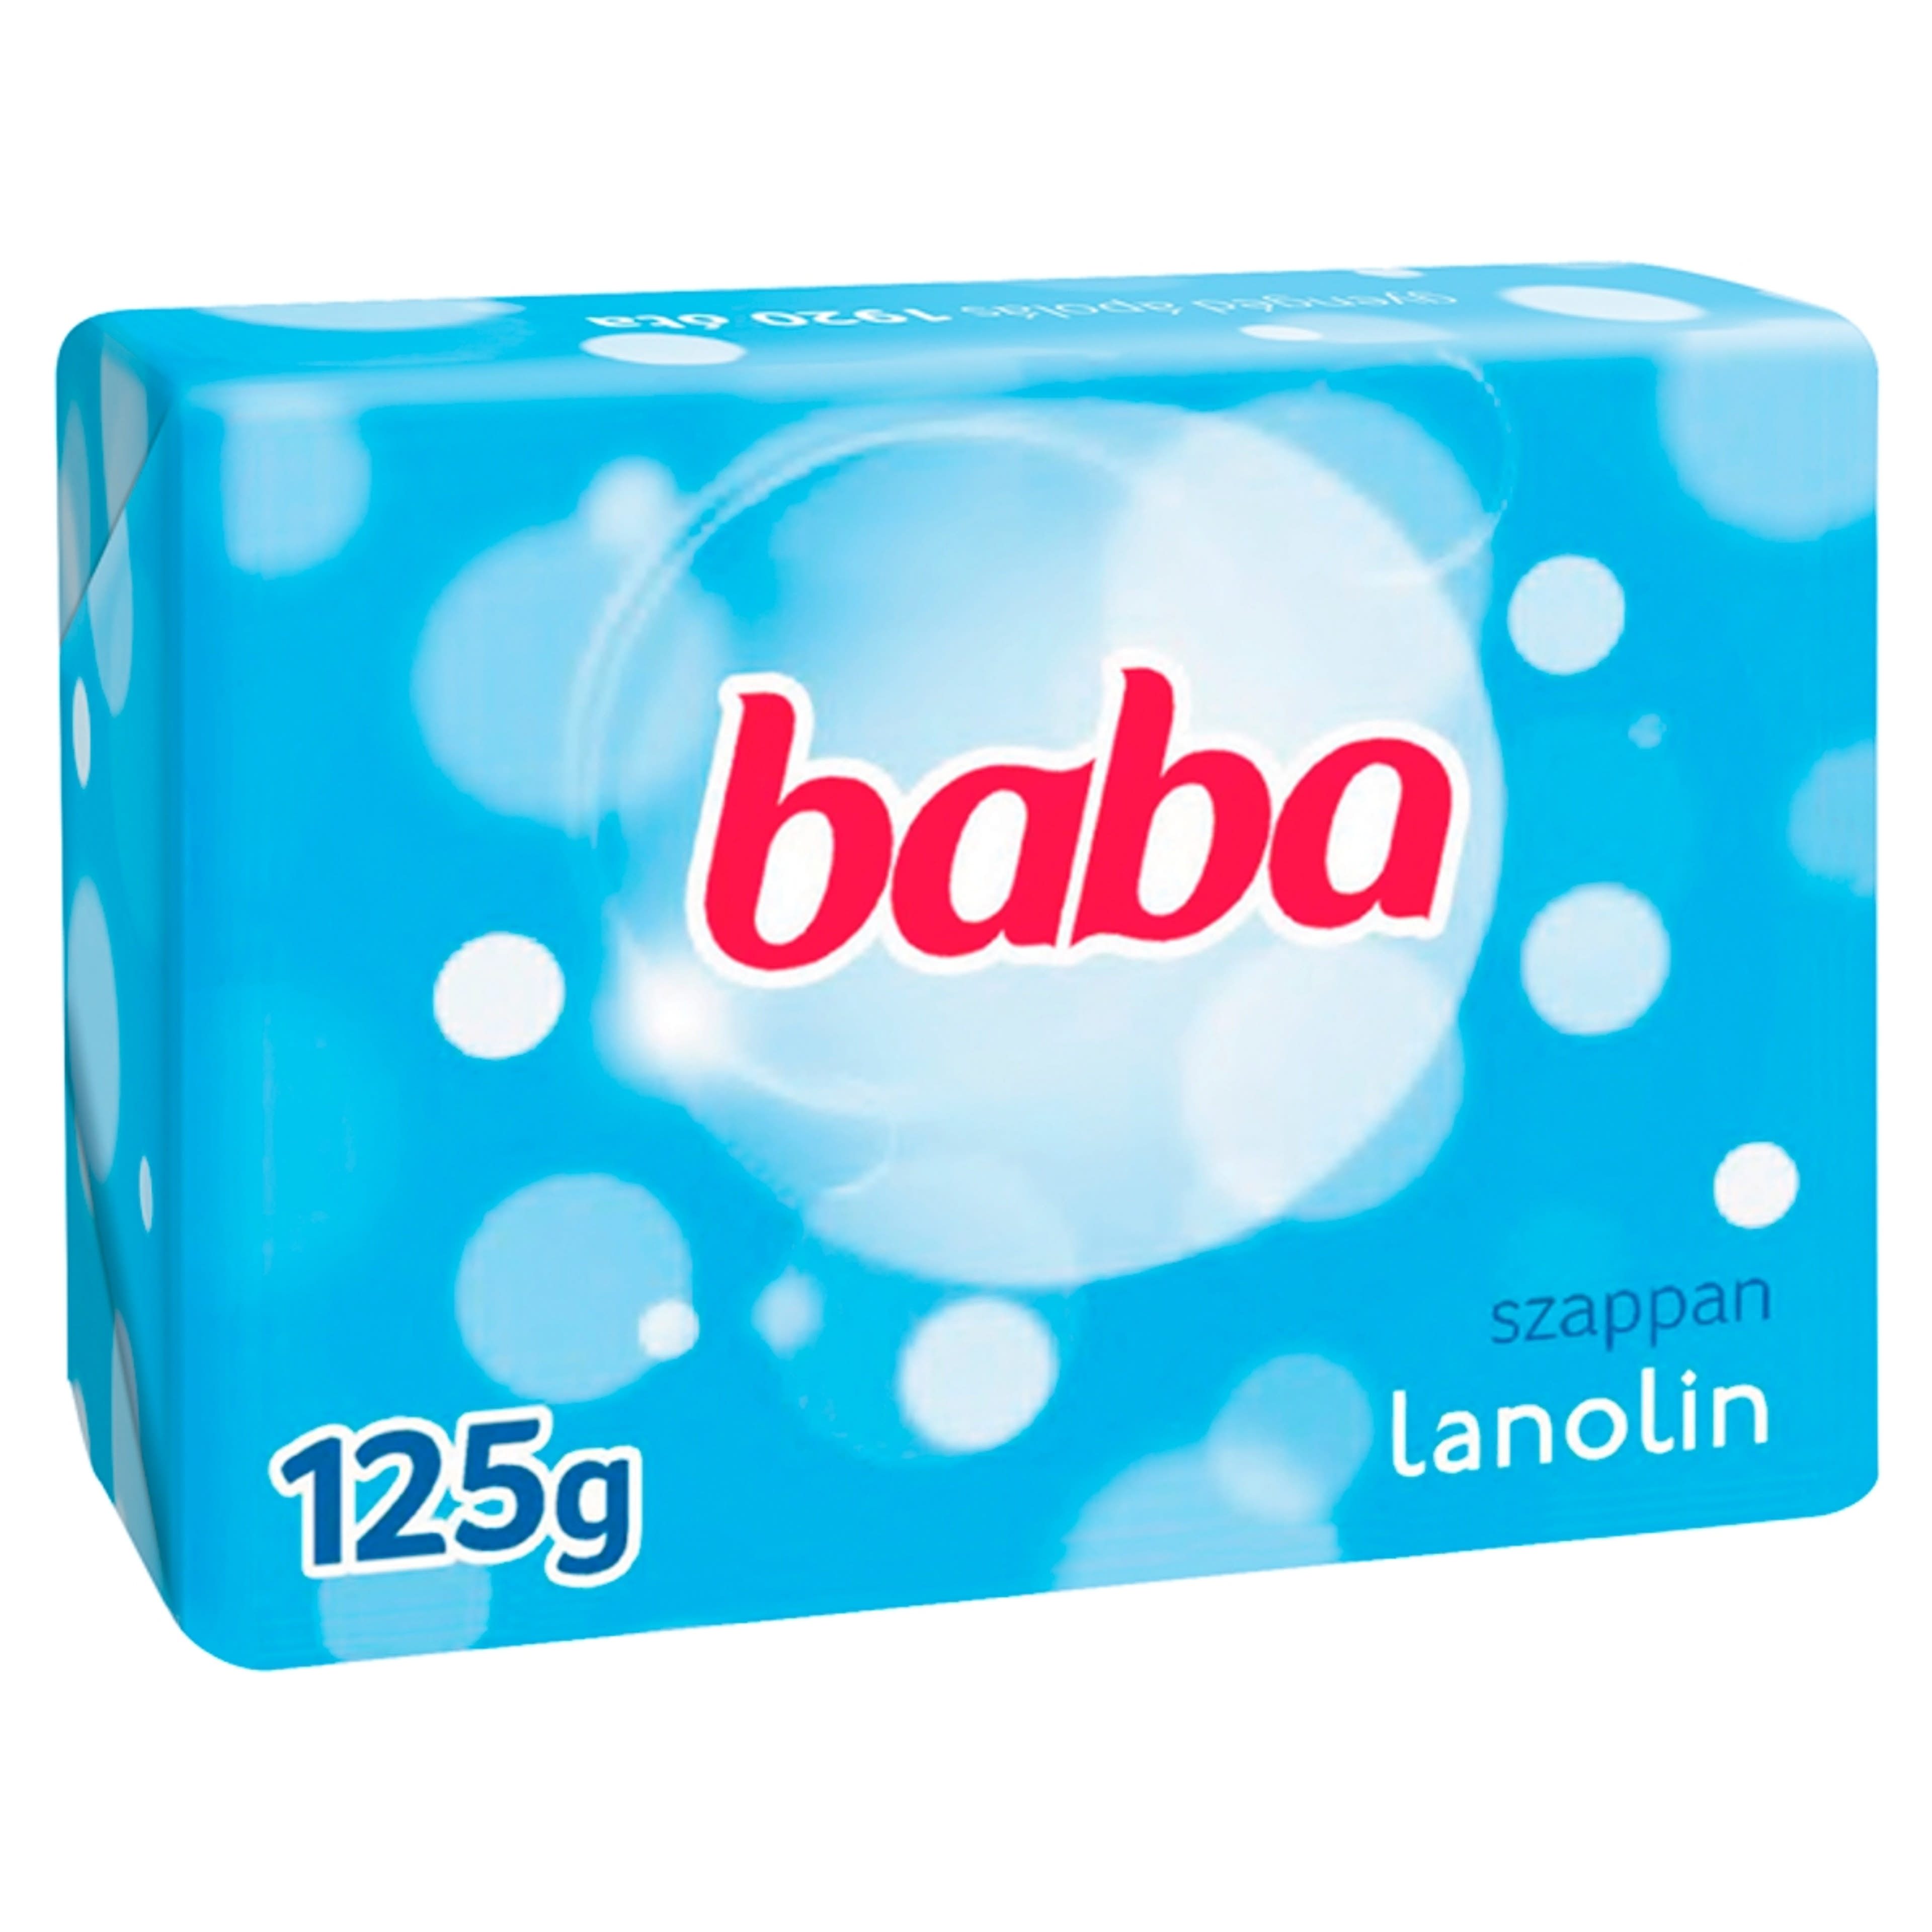 Baba lanolinos szappan - 125 gr-1